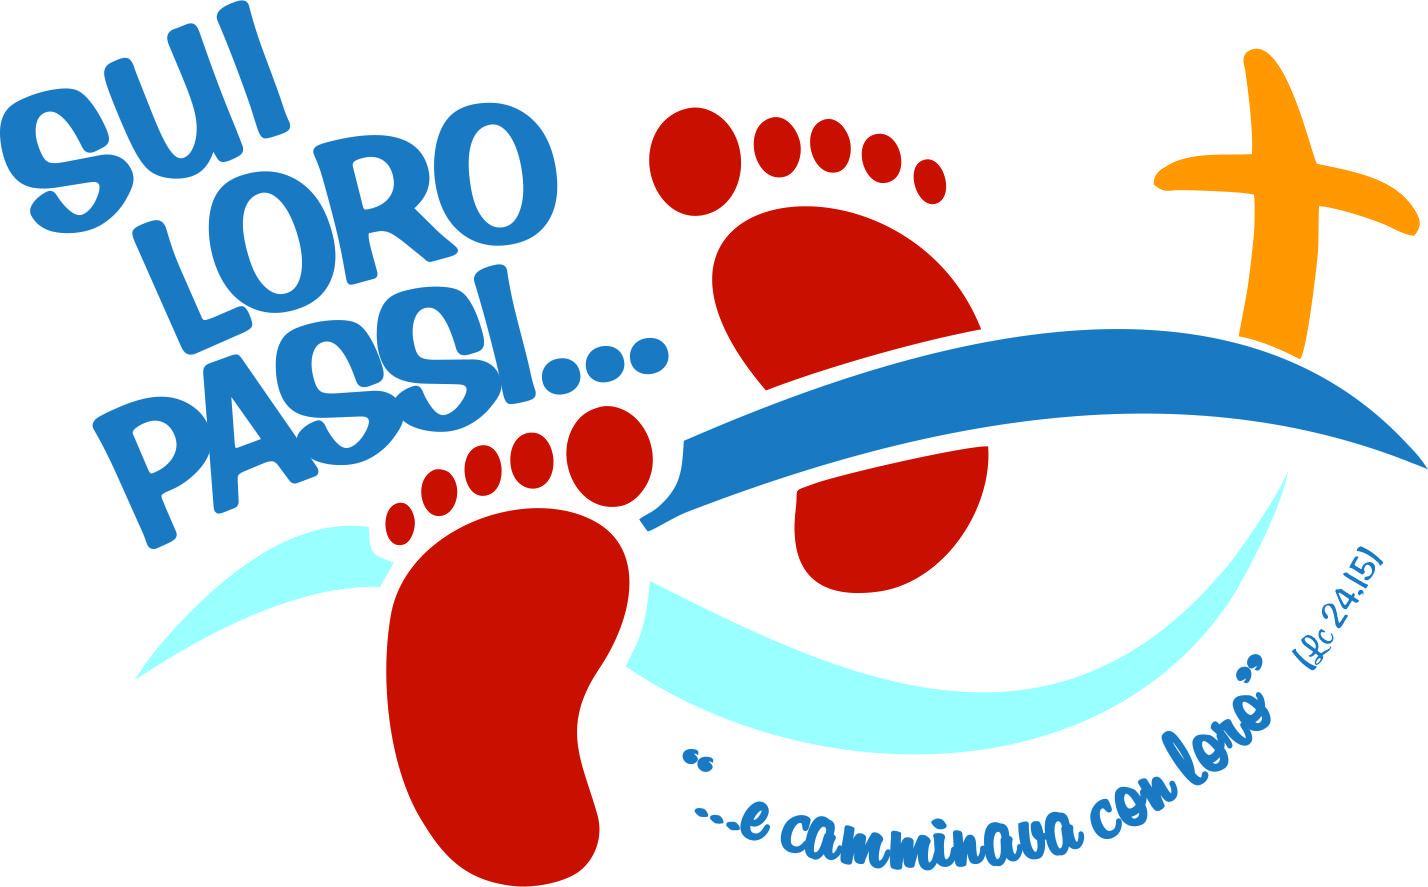 Logo_Suiloropassi_jpeg